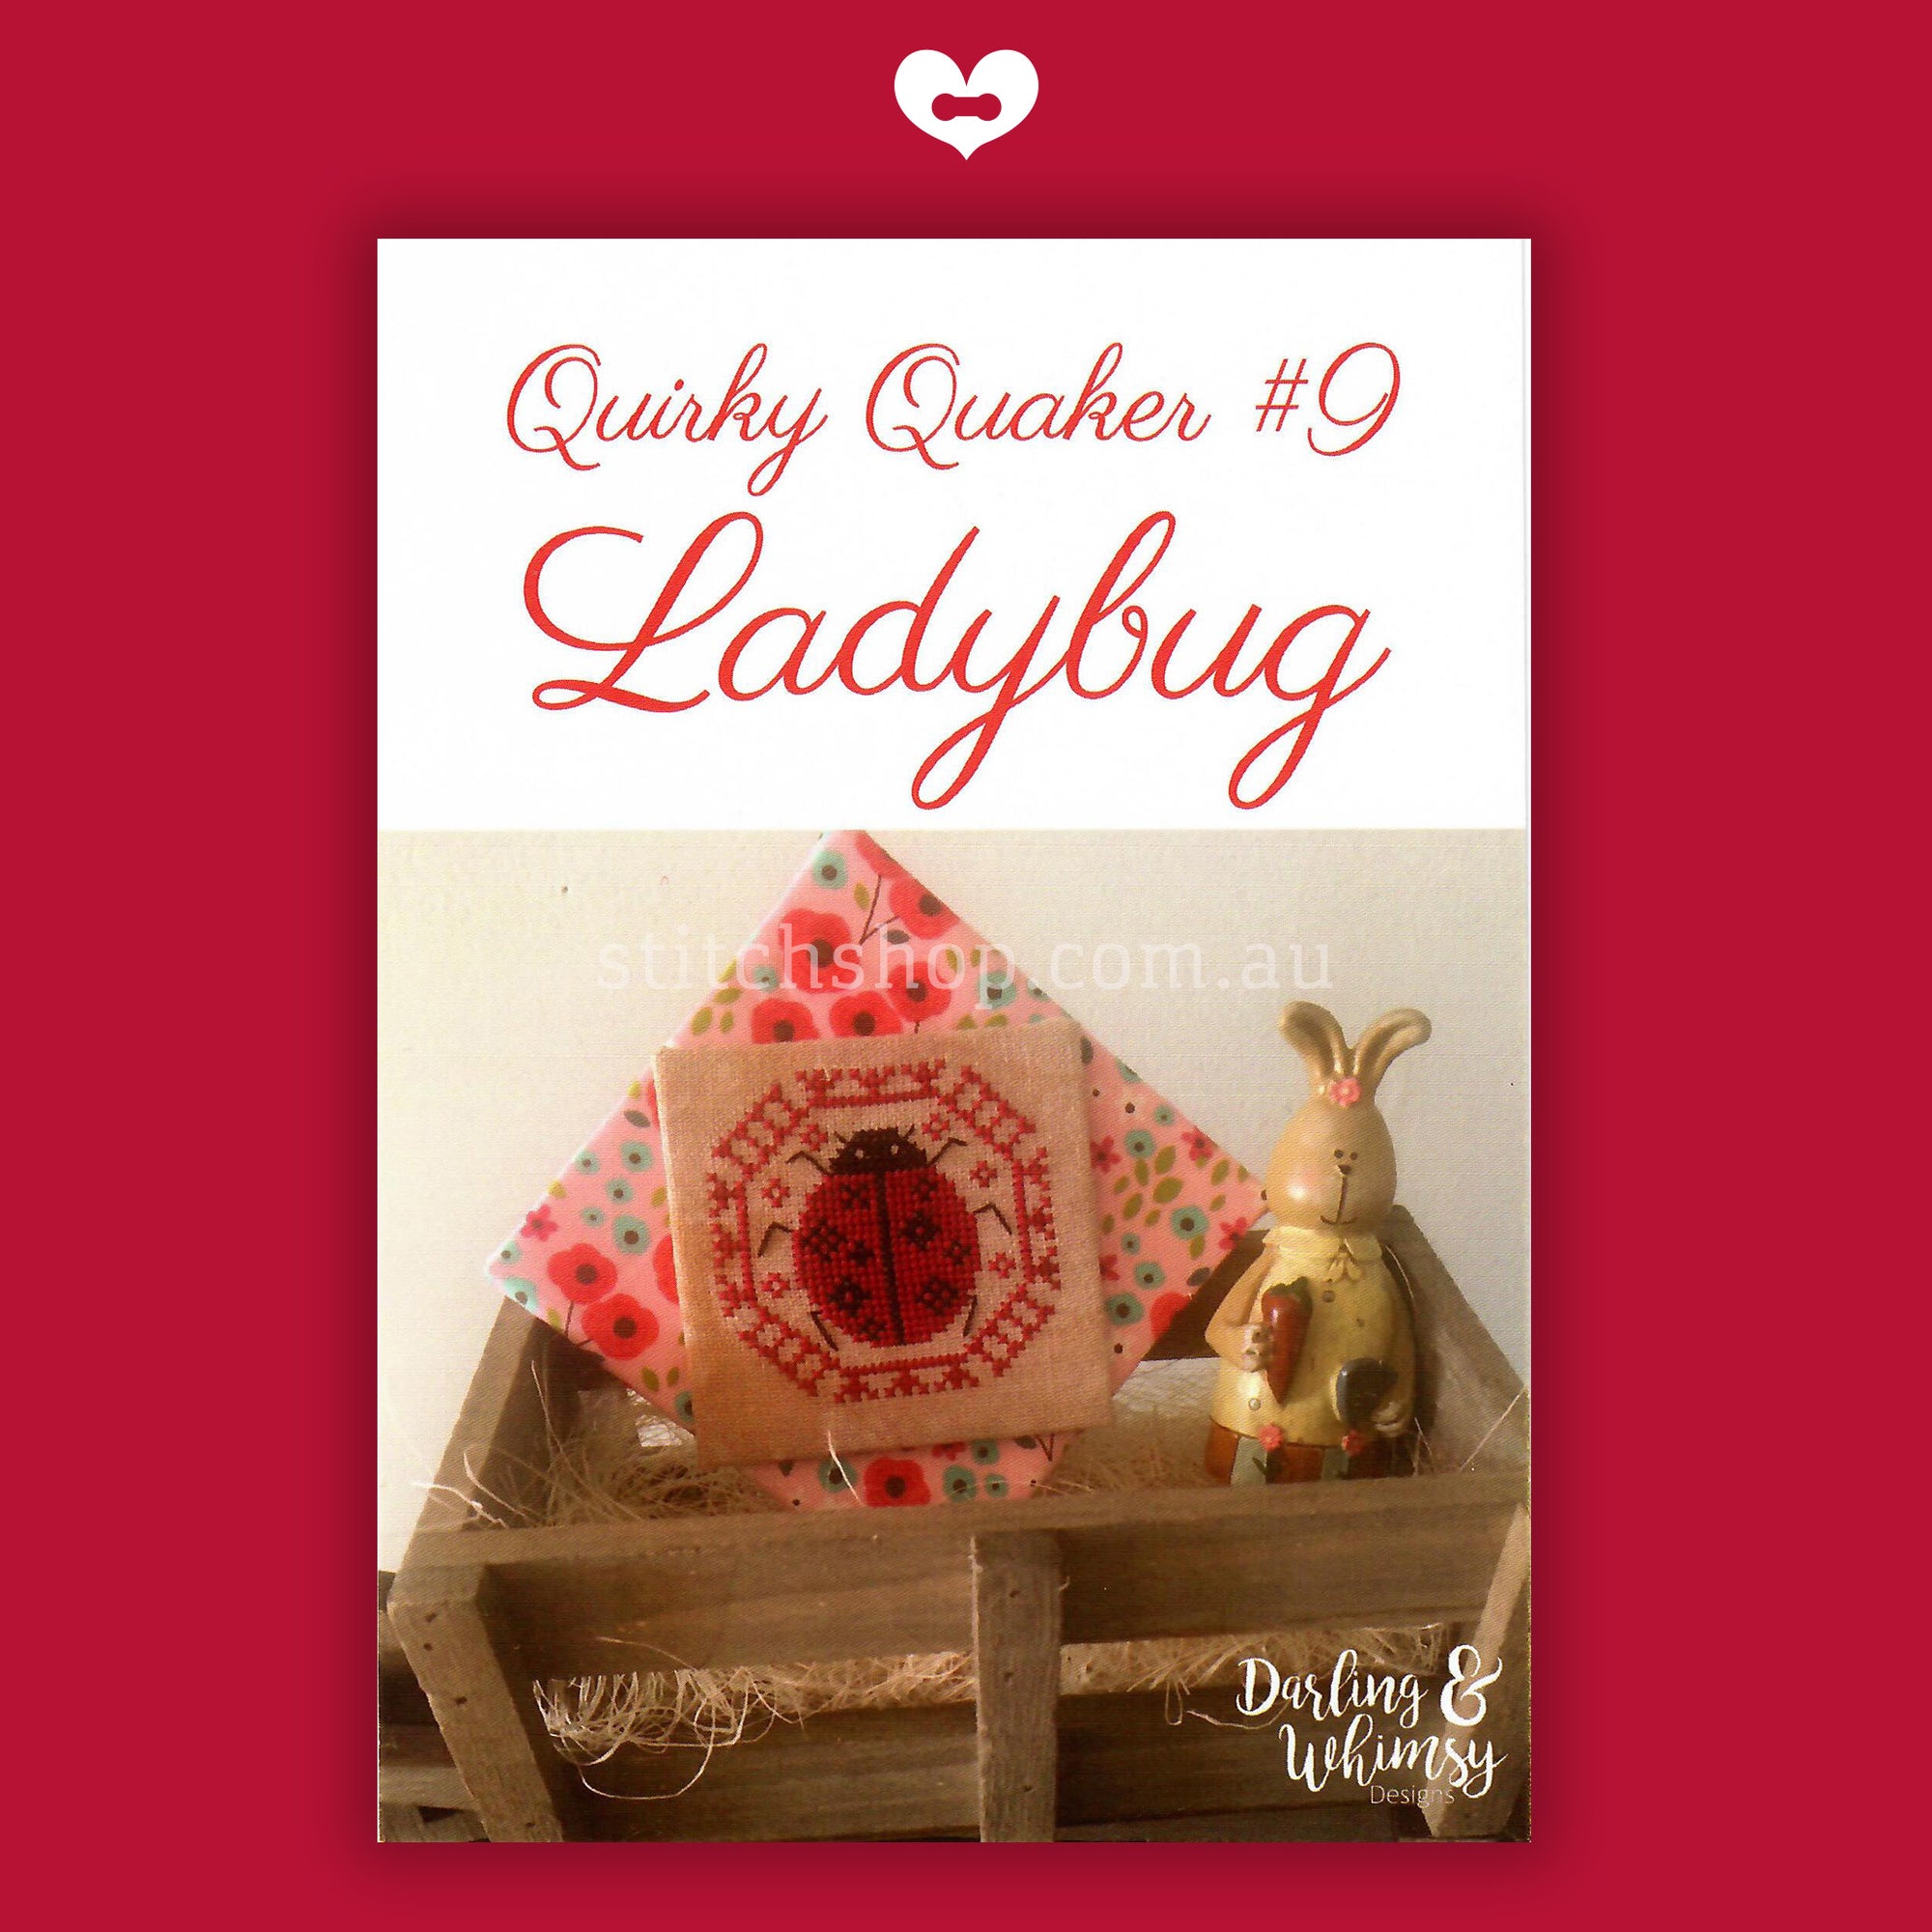 Quirky Quaker 9: Ladybug